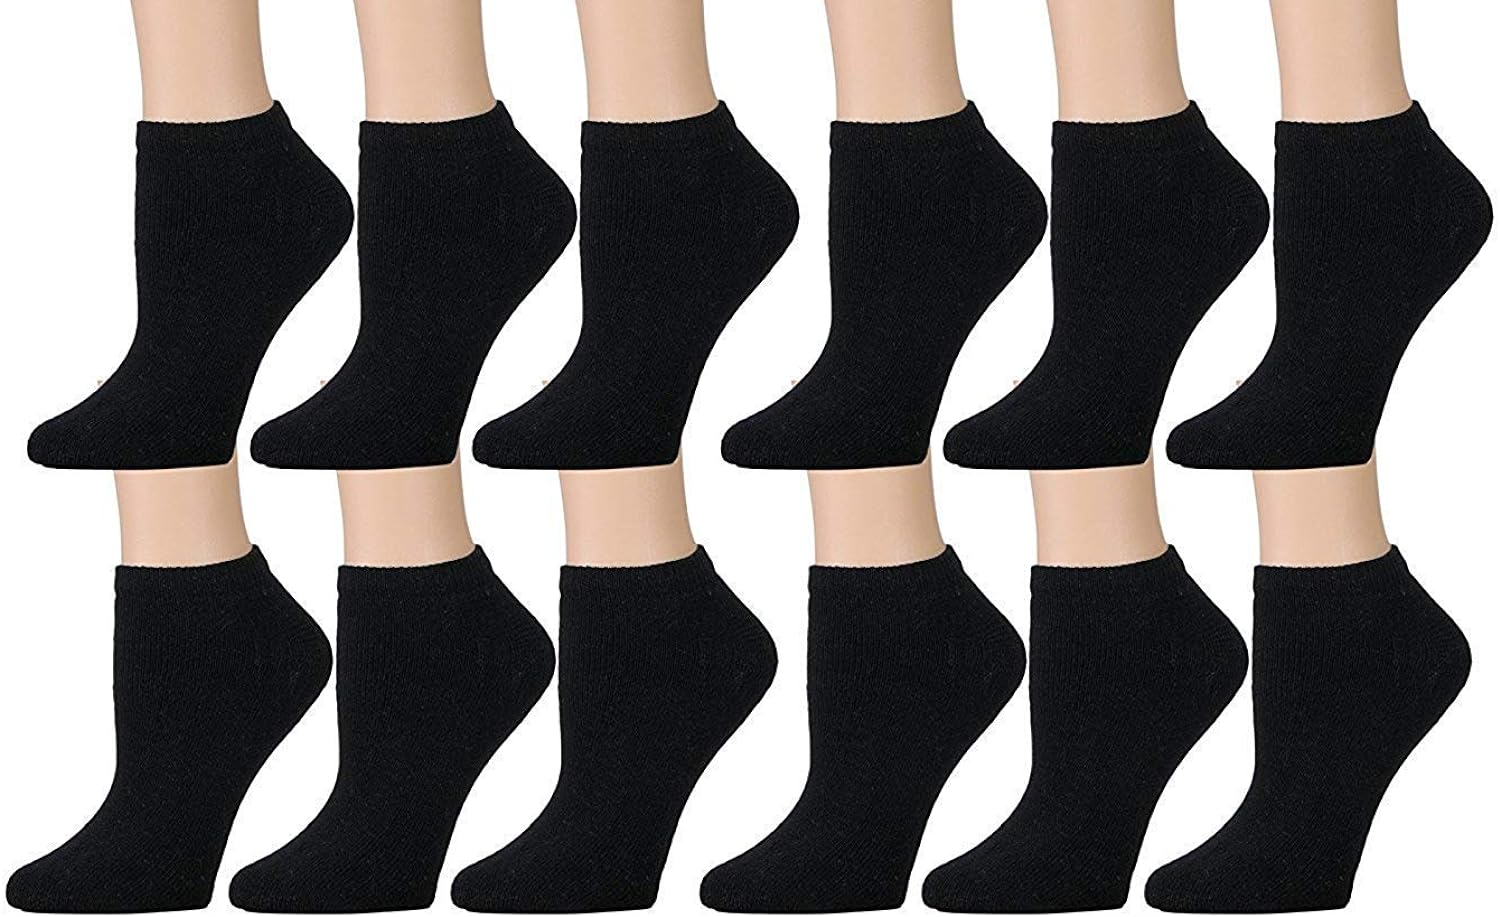 Yacht & Smith SOCKS'NBULK 12 Pairs Women's Low Cut Socks Cotton No Show Ankle Socks, Many Styles (Black)